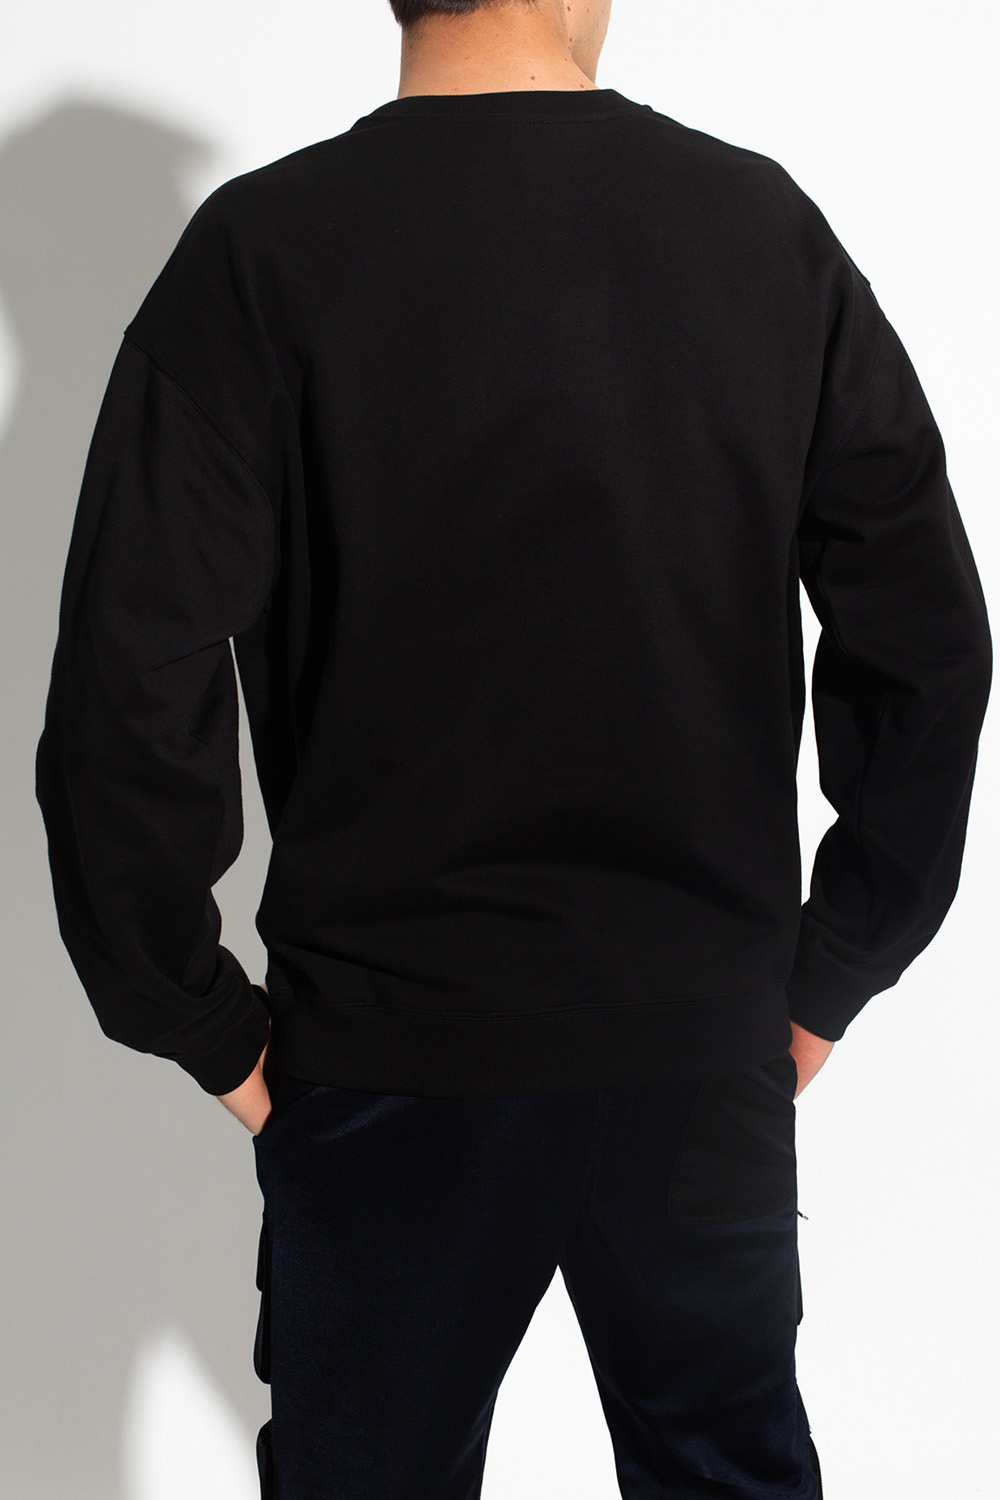 Versace Logo-printed Jacket sweatshirt